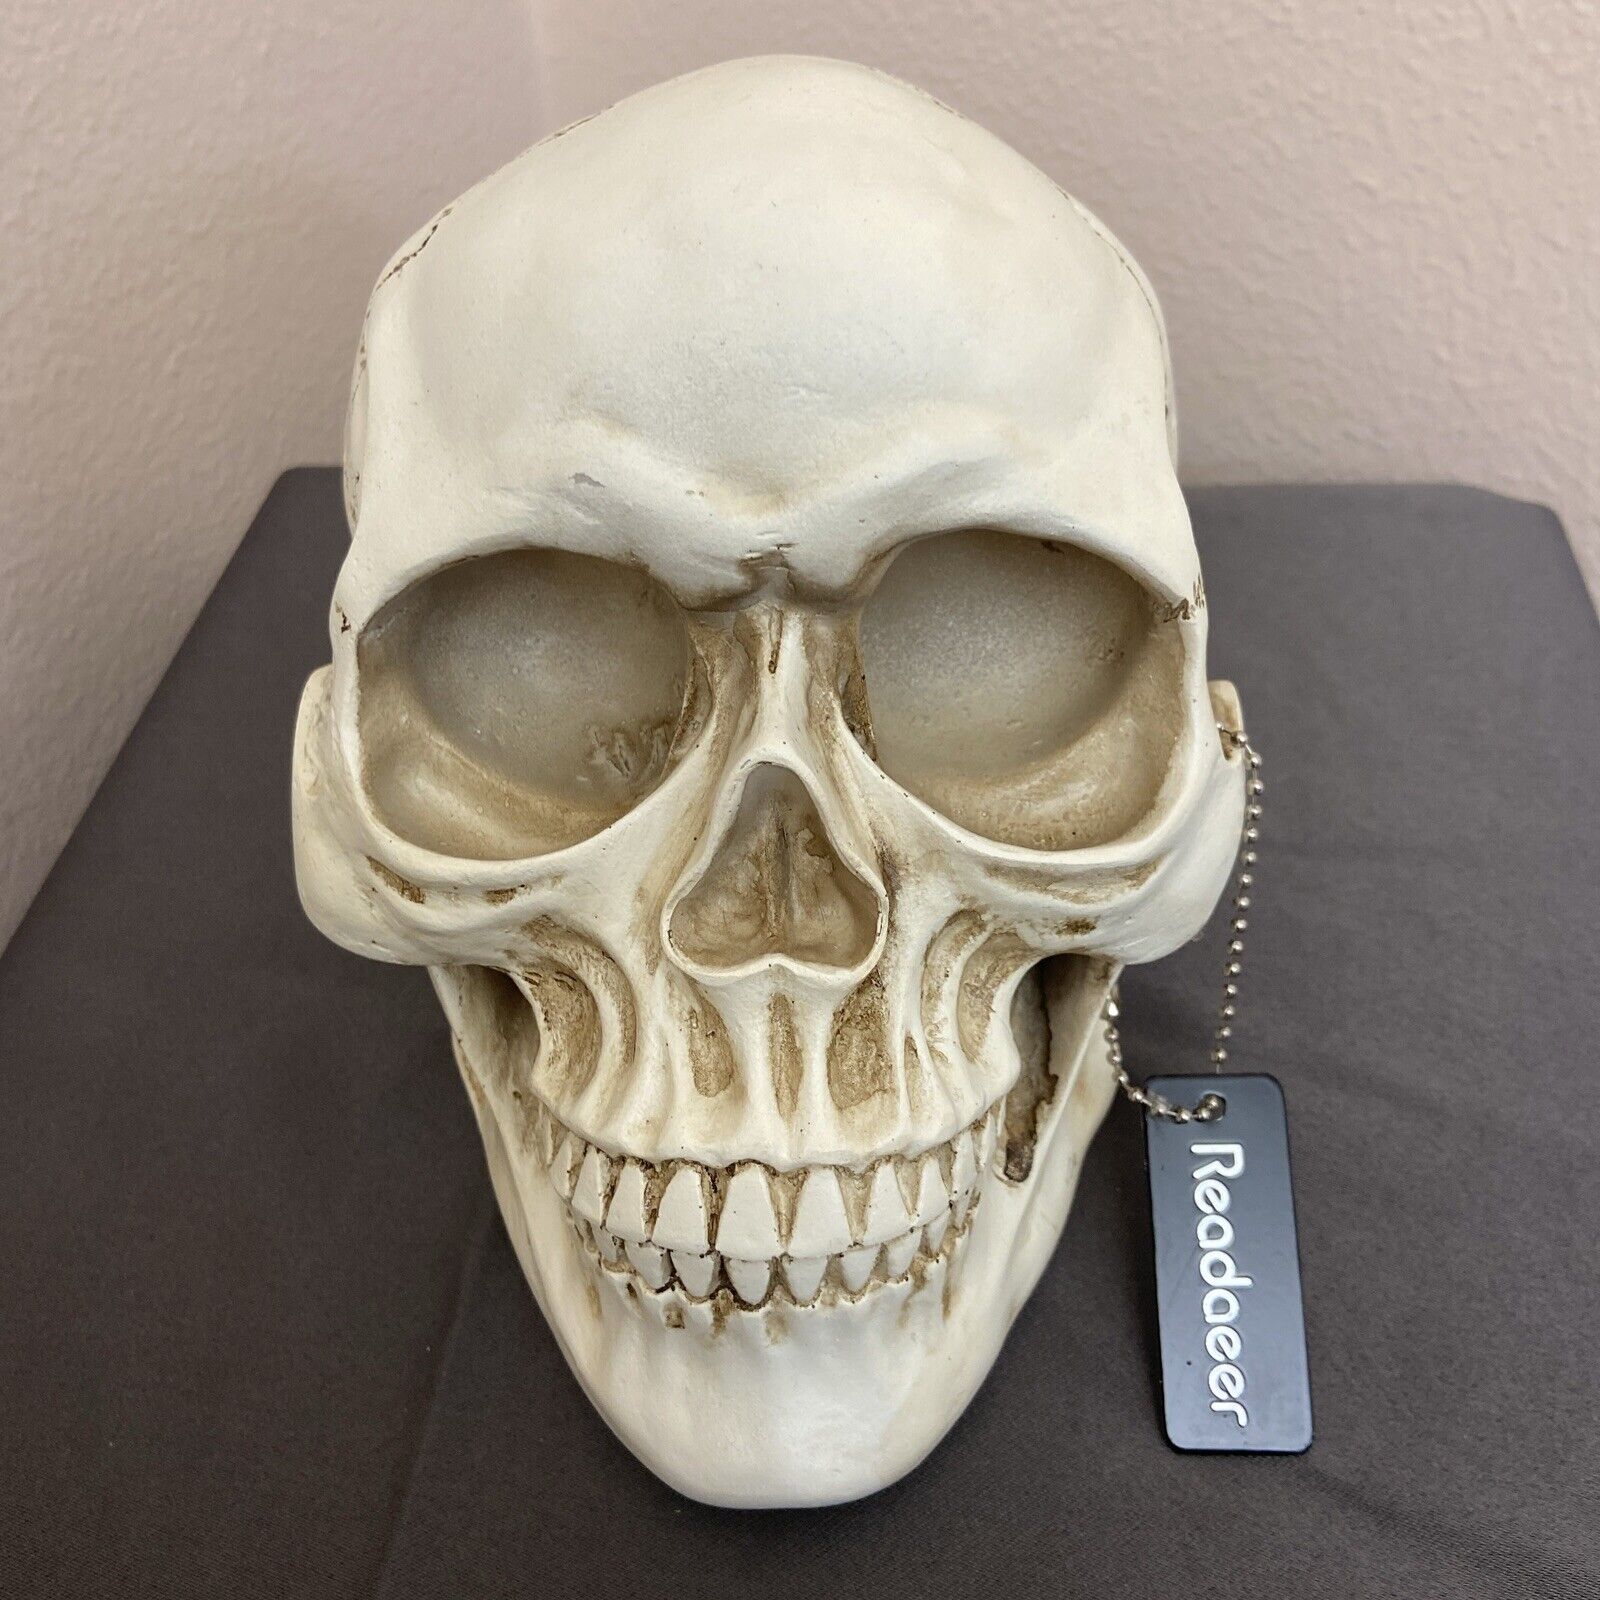 Readaeer 1:1 Human Skull Model With Tag